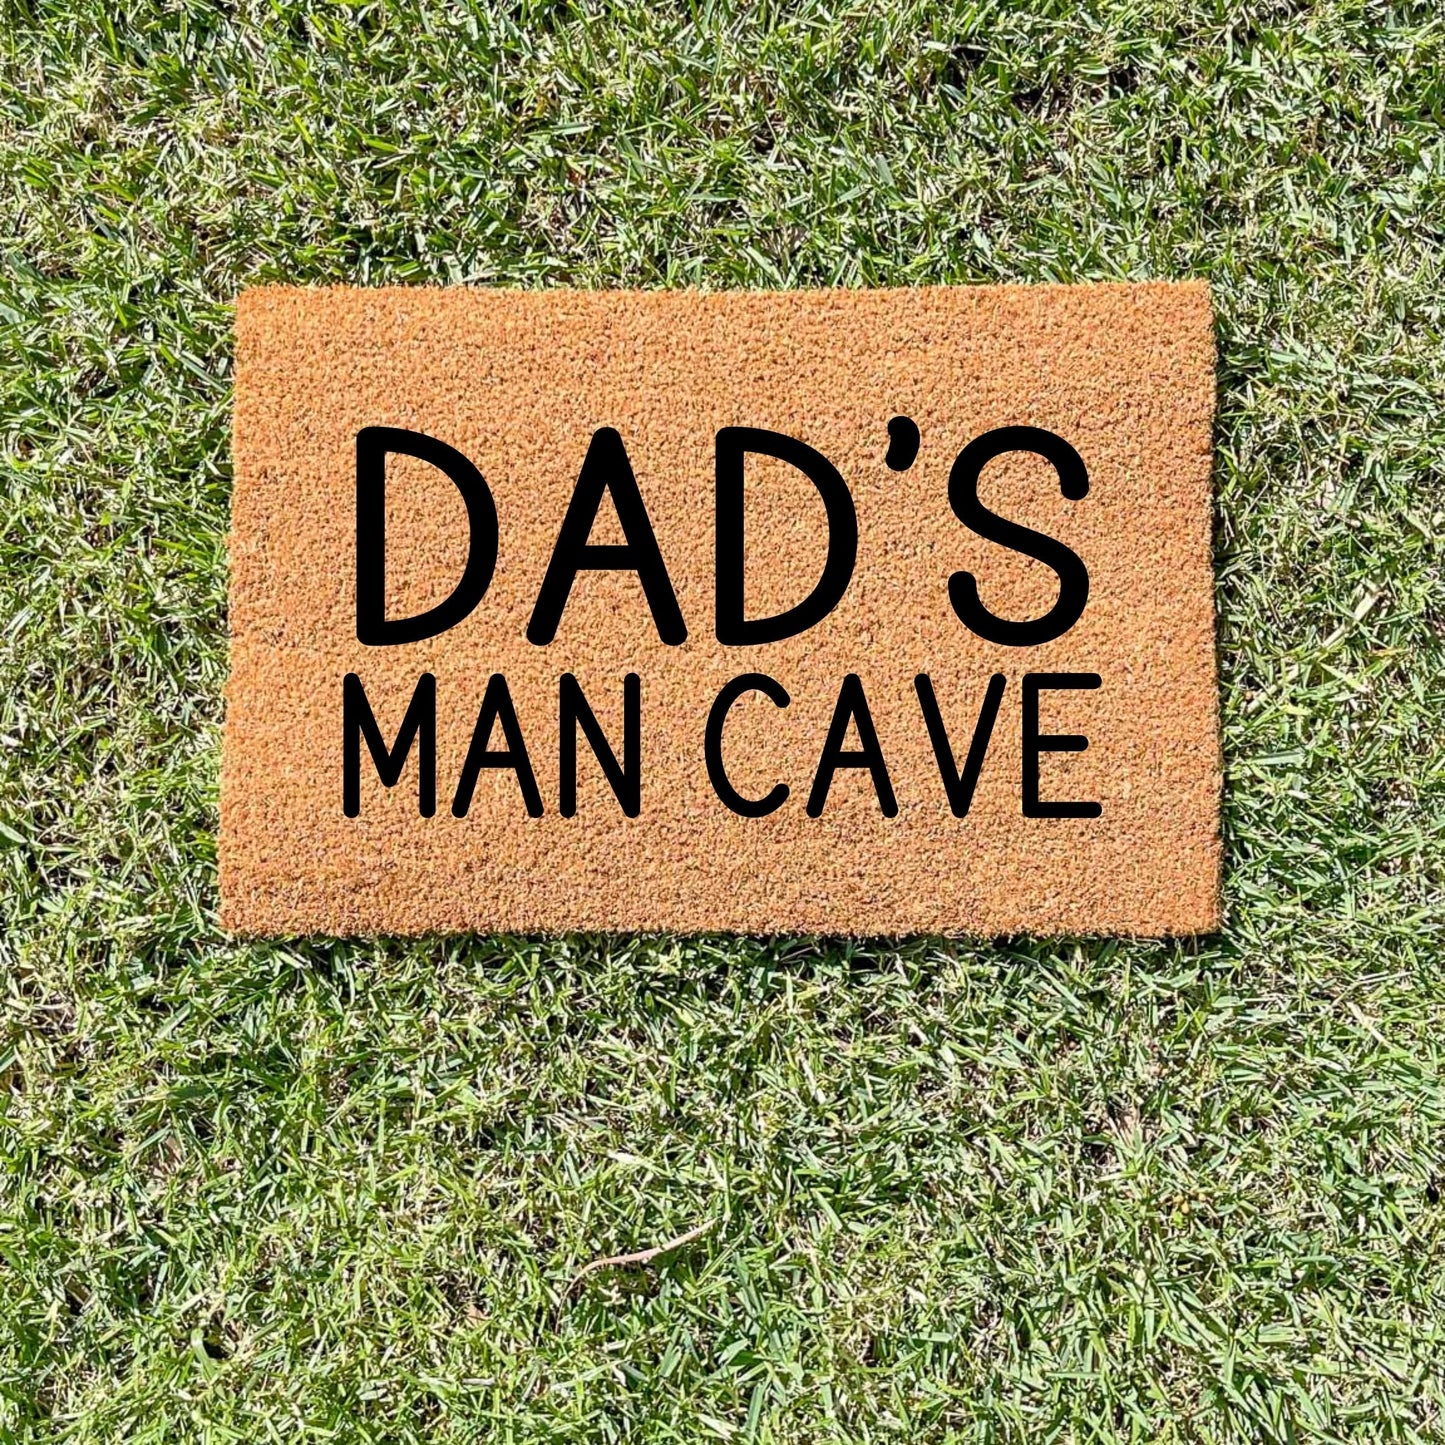 Dad's man cave doormat, fathers day gift, gifts for him, birthday gift, dad doormat, grandpa doormat